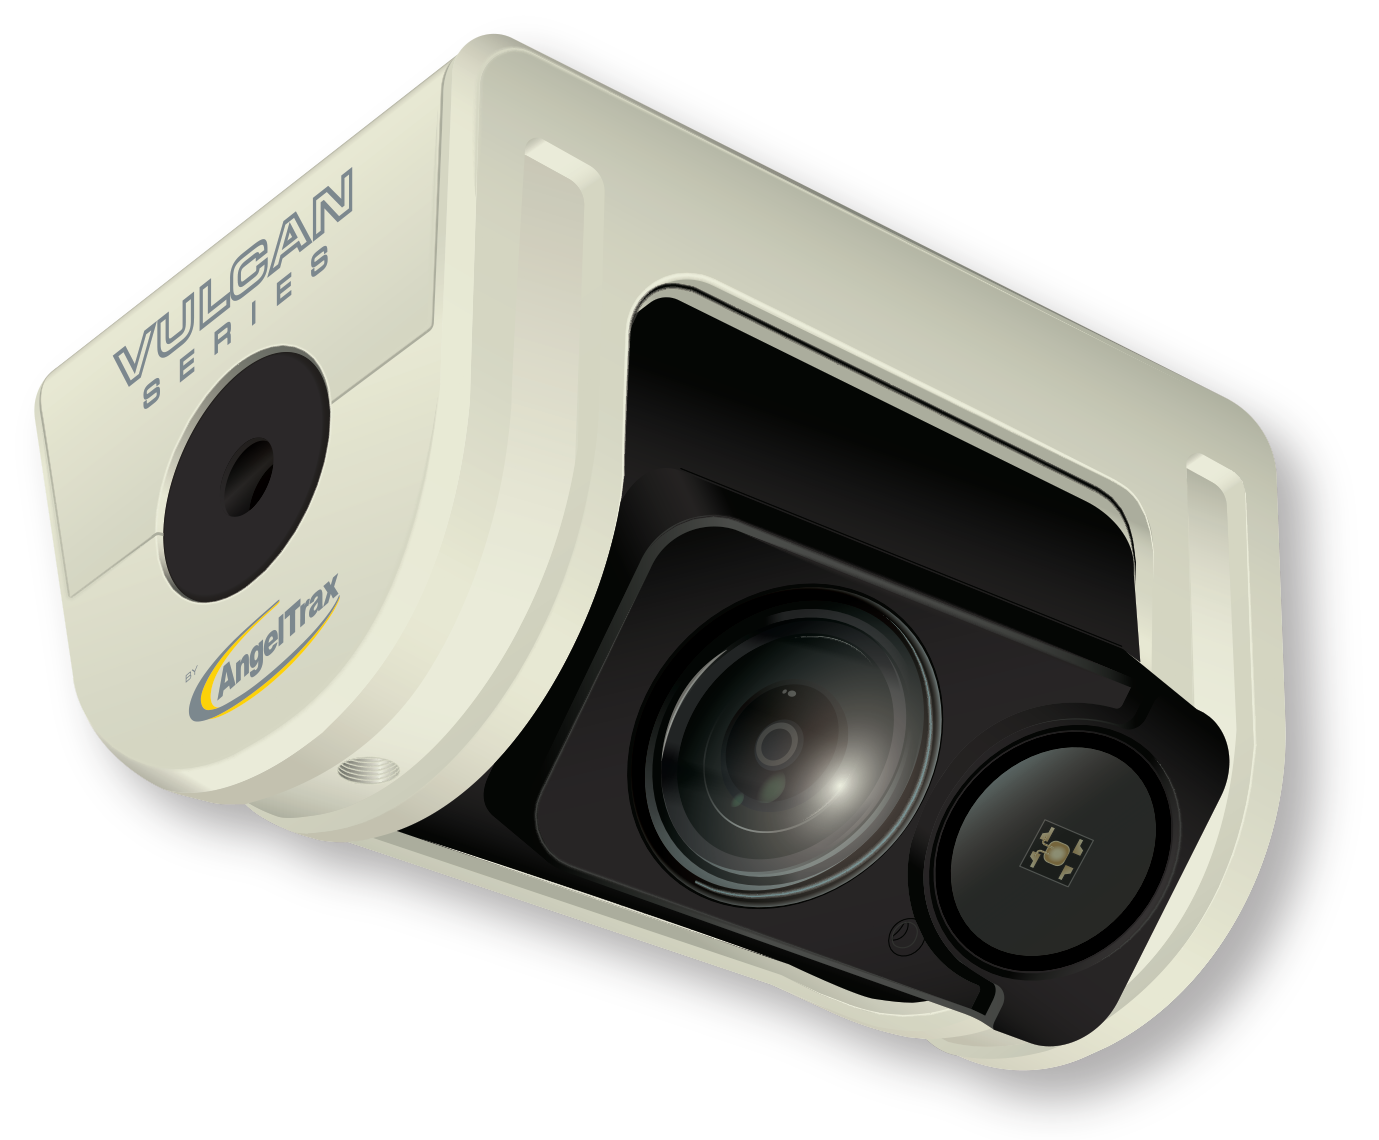 image of the IPSM 1700 IP camera